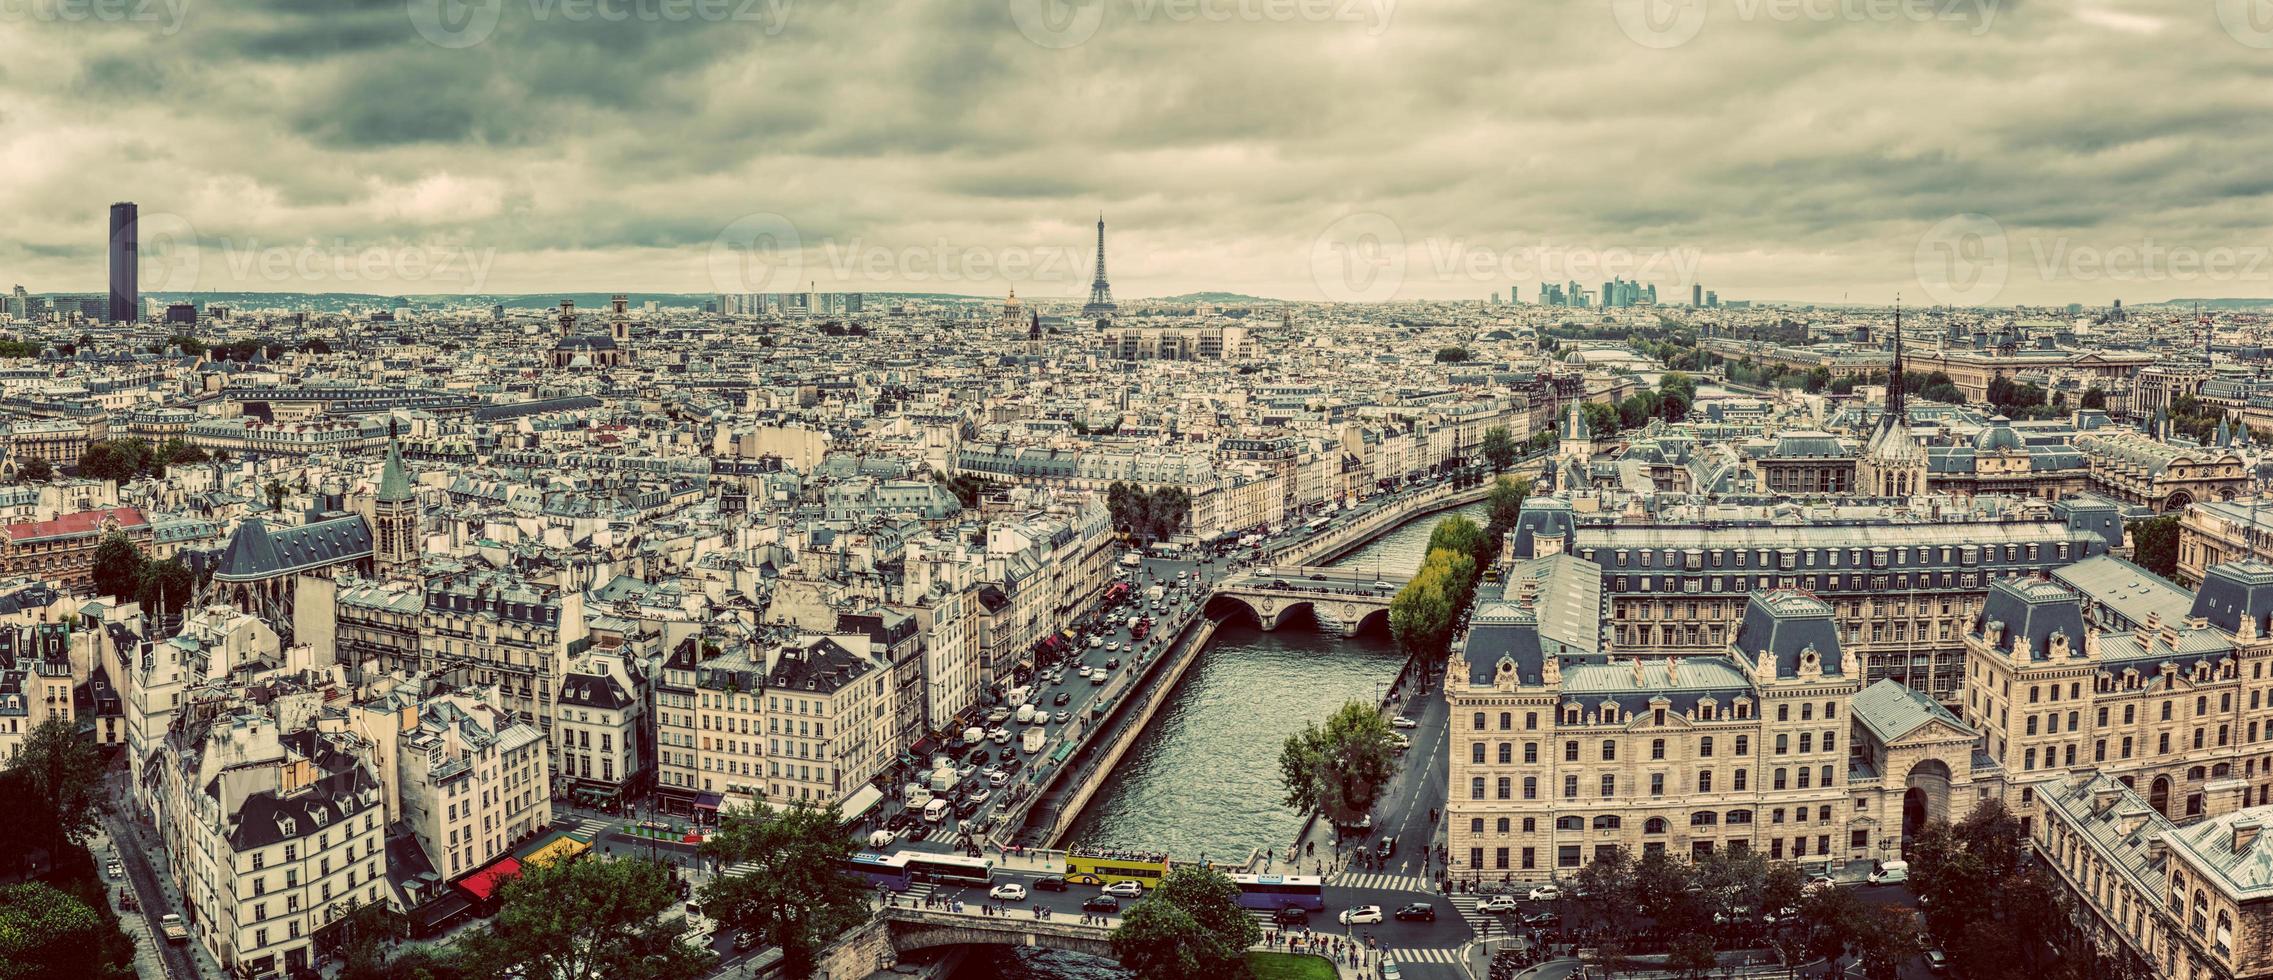 Paris, France panorama with Eiffel Tower, Seine river and bridges. Vintage photo